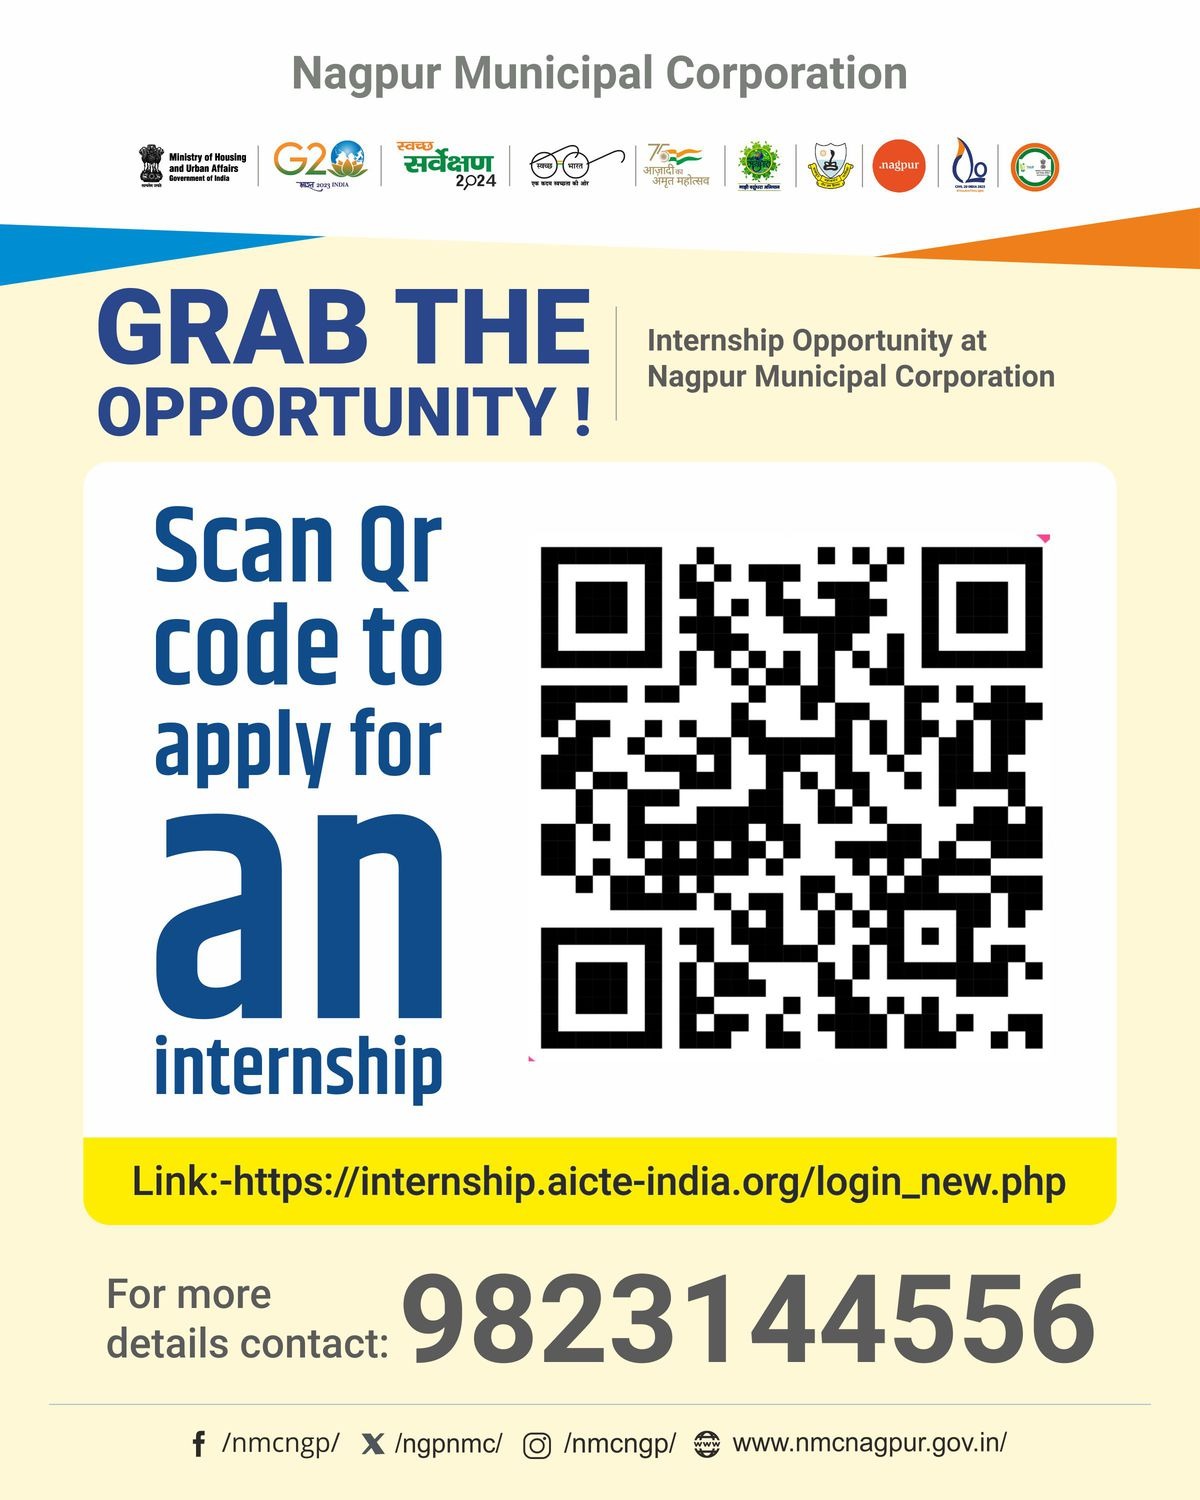 Nagpur MC Tulip Internship Program 2024 Registration